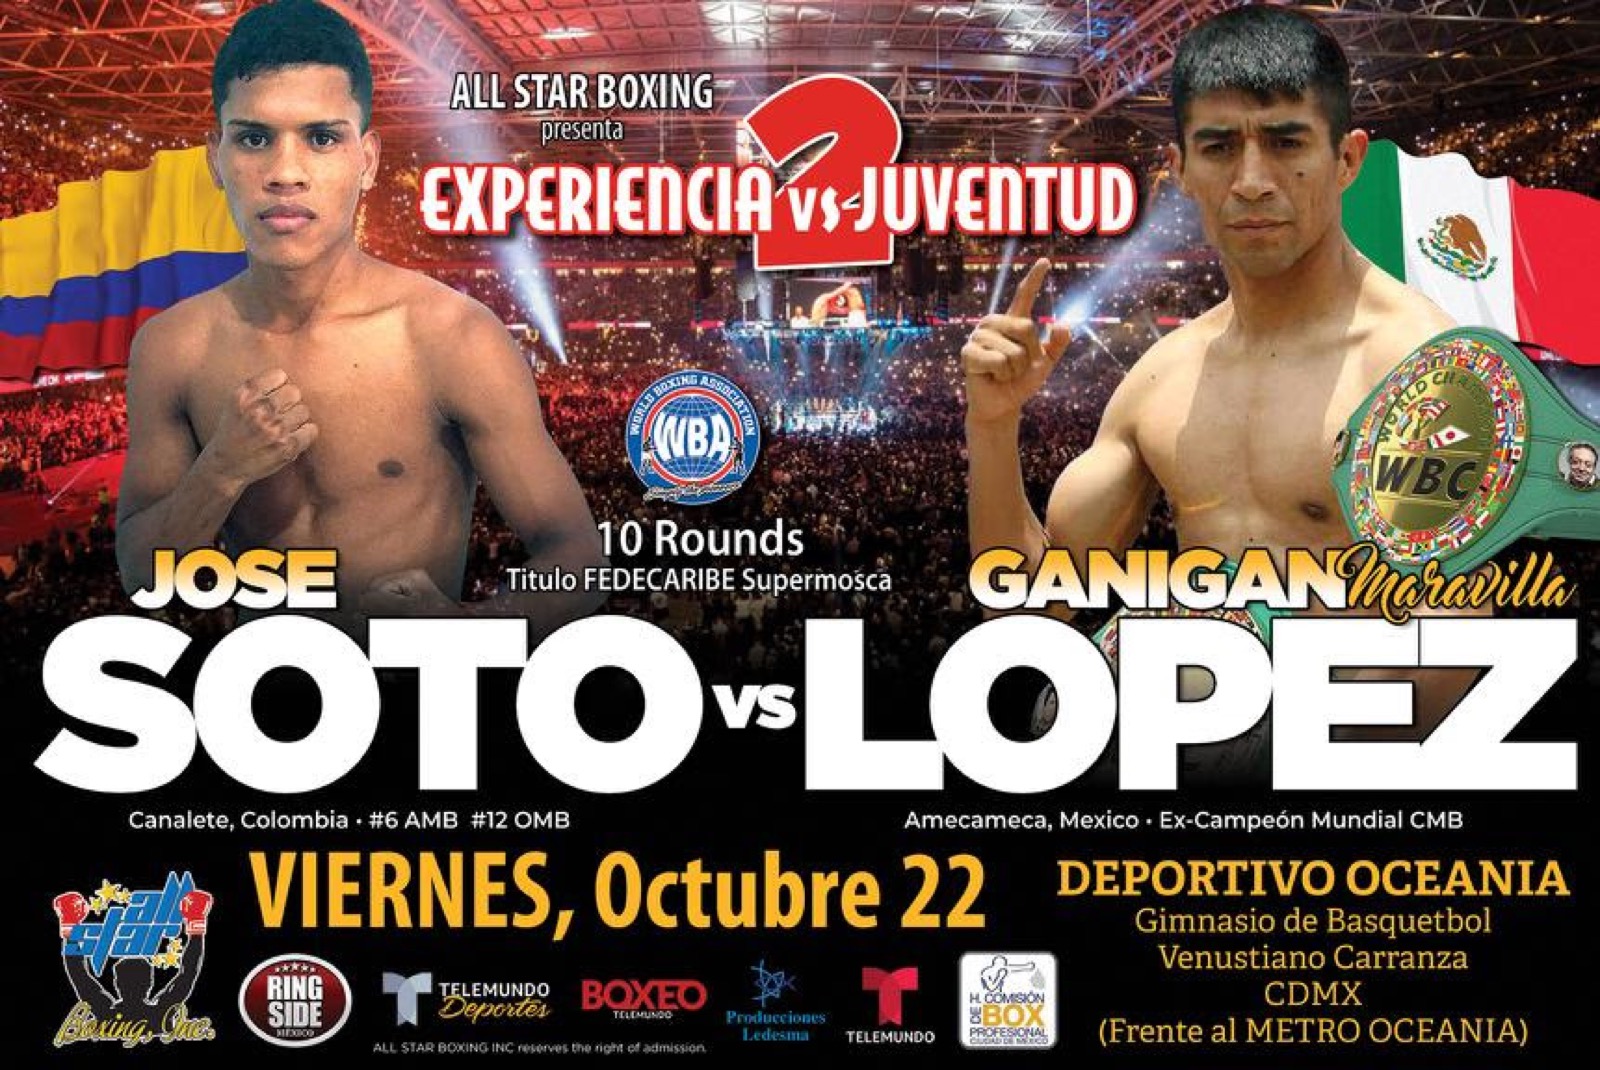 Ganigan Lopez Vs. Jose Soto on October 22 in Mexico